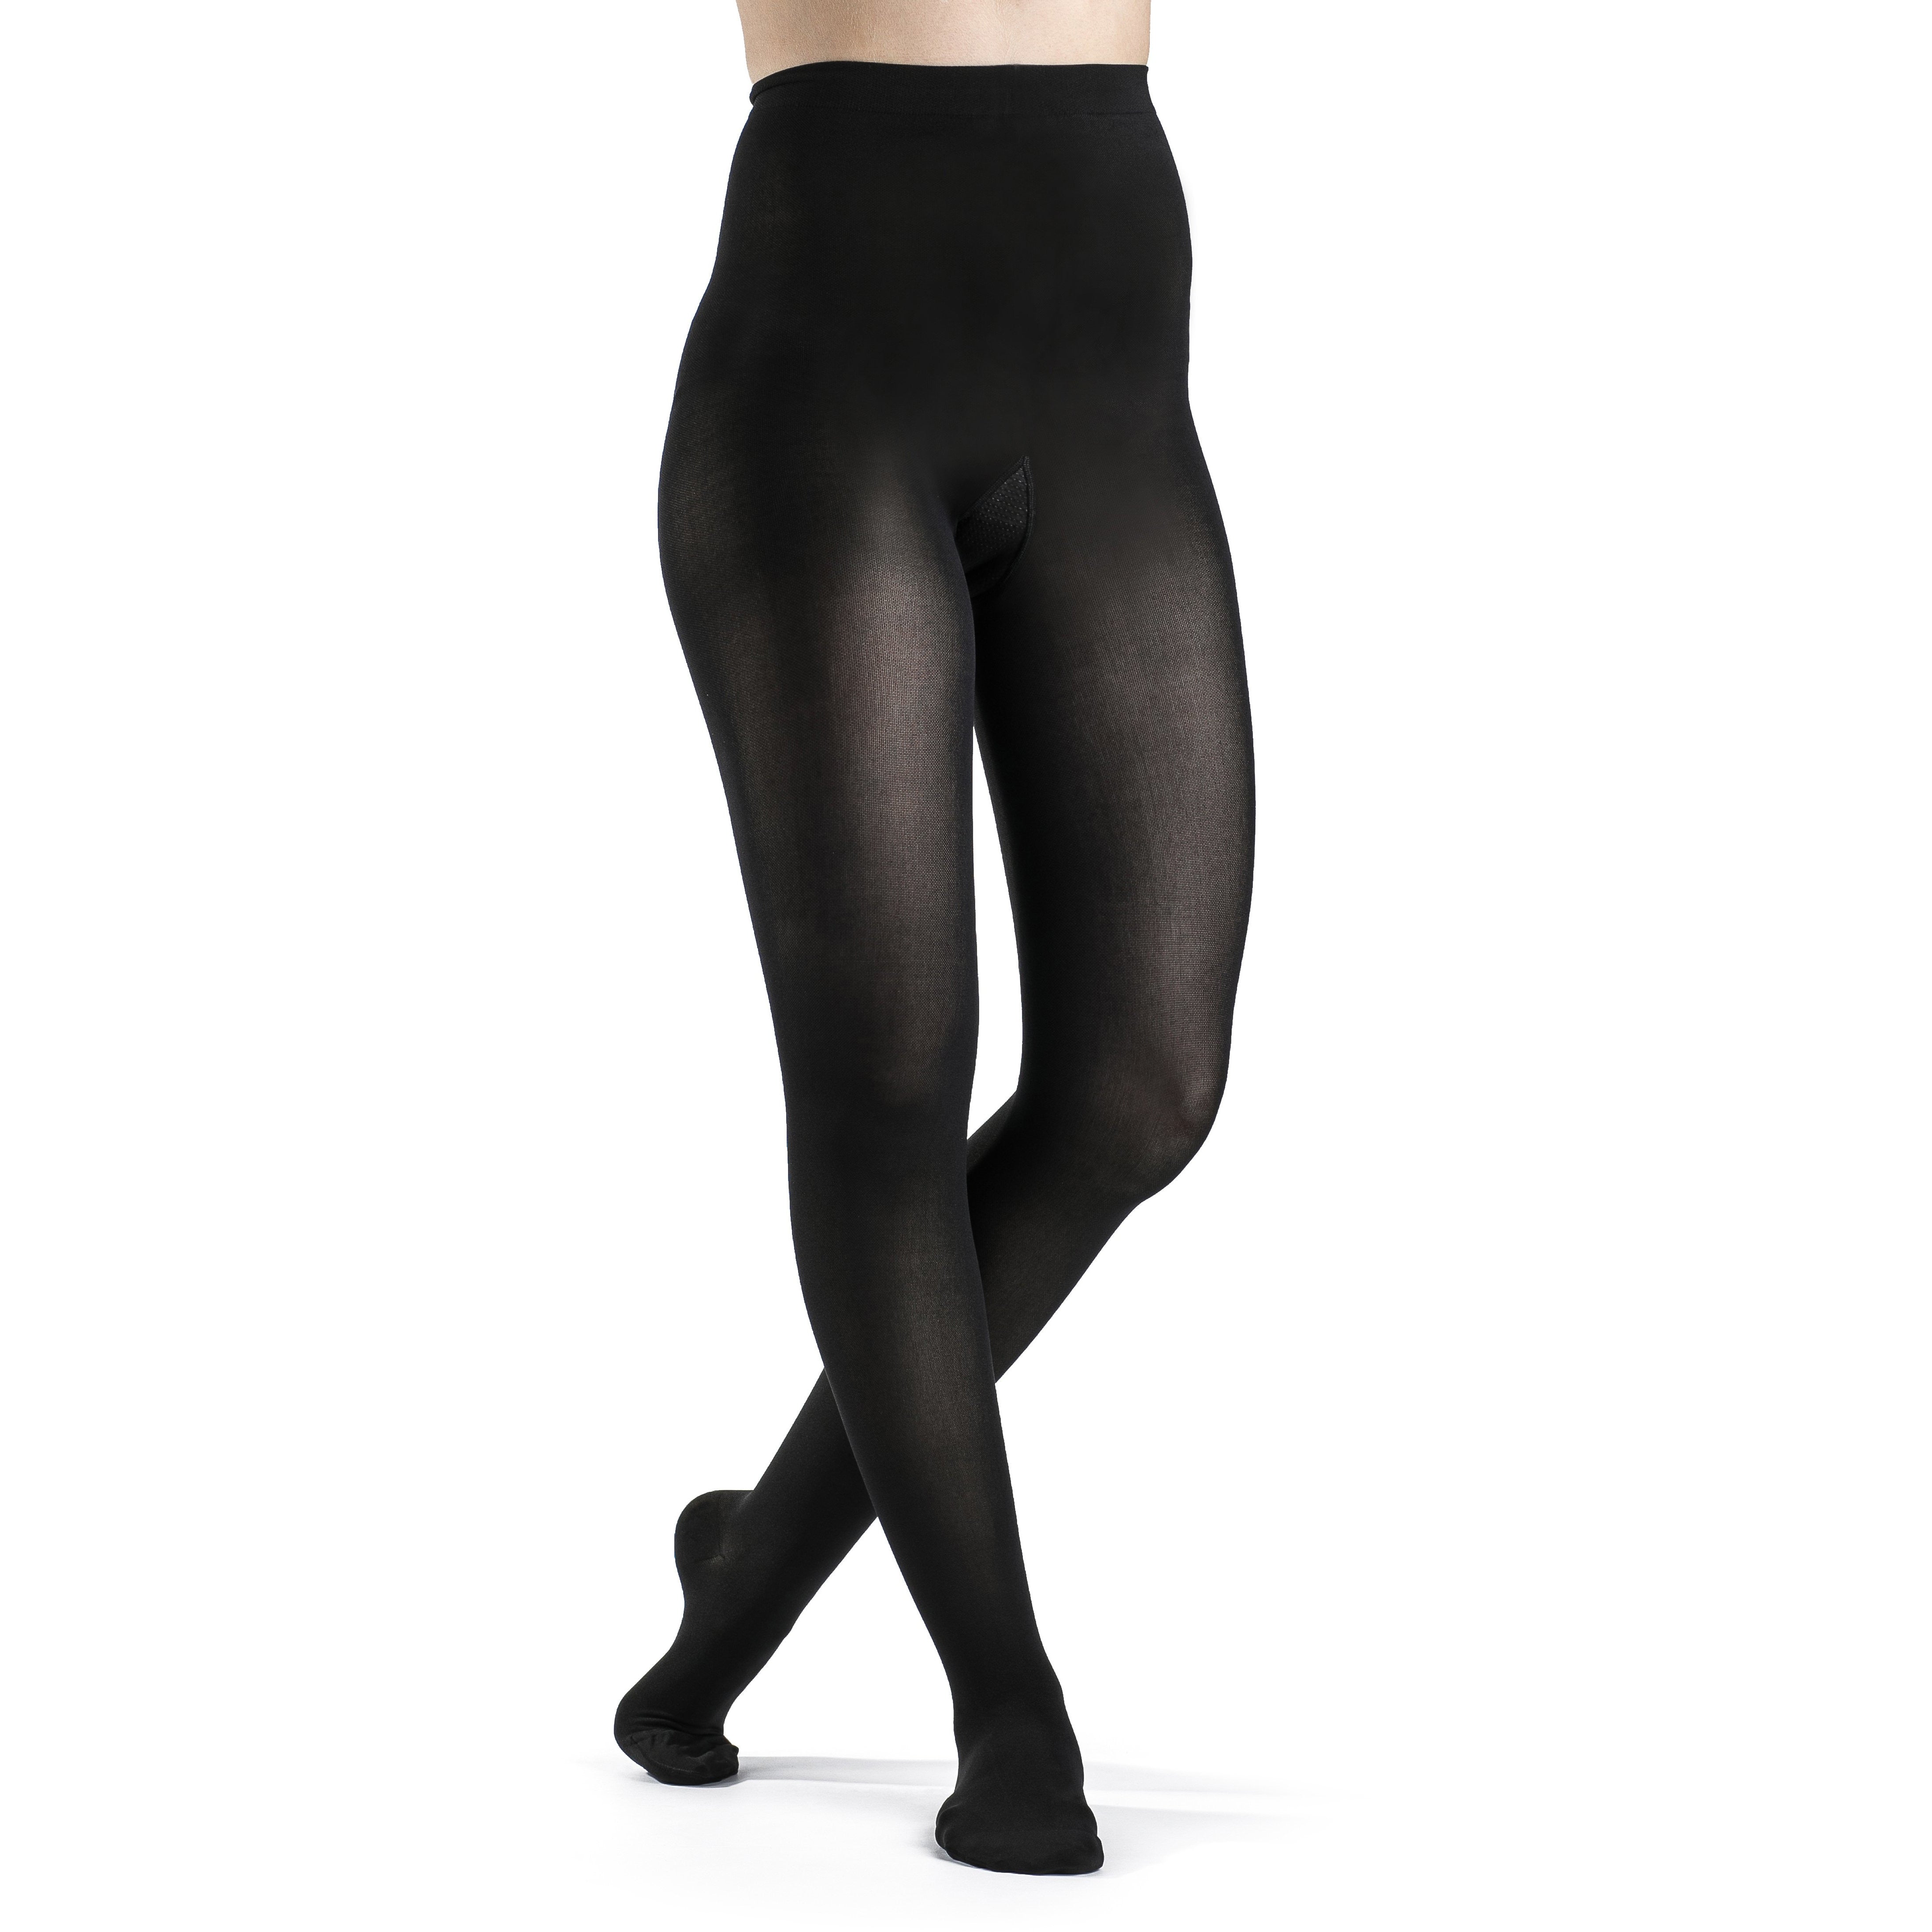 Sigvaris Soft Opaque Women's 30-40 mmHg Pantyhose, Black